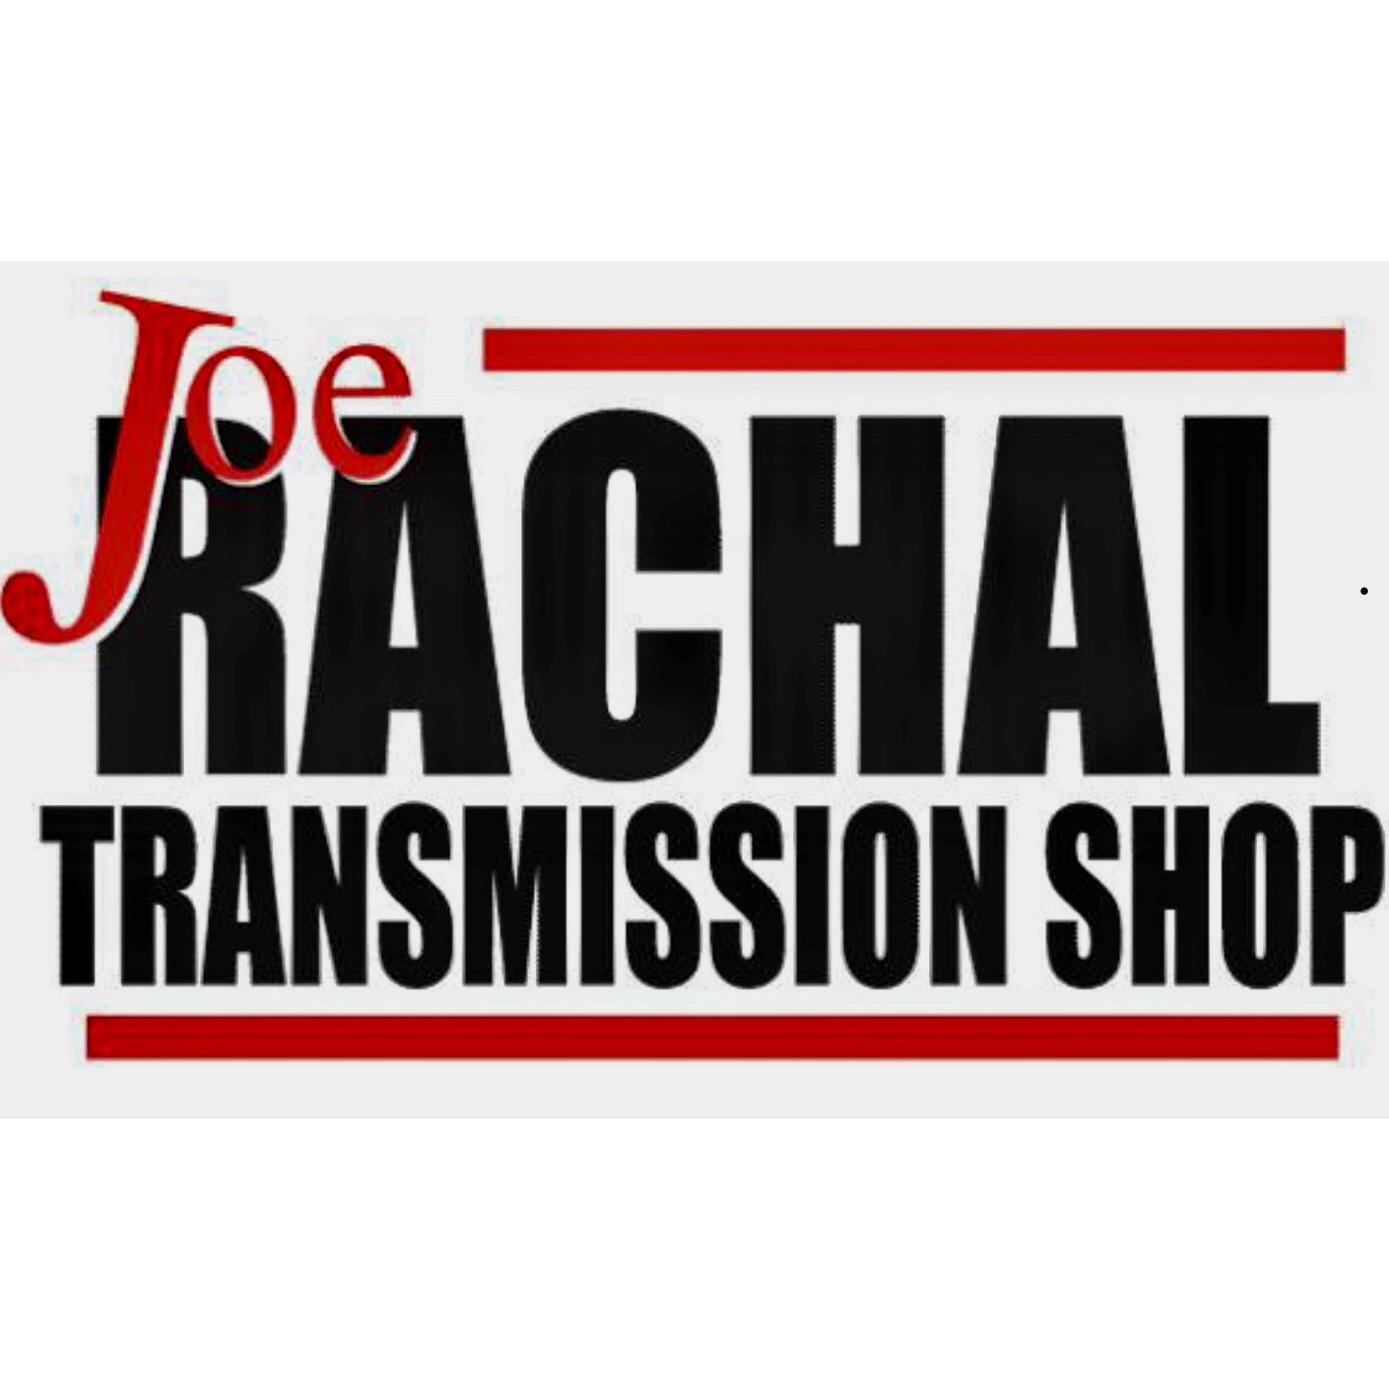 Joe Rachal Transmissions - Shreveport, LA 71103 - (318)226-9005 | ShowMeLocal.com